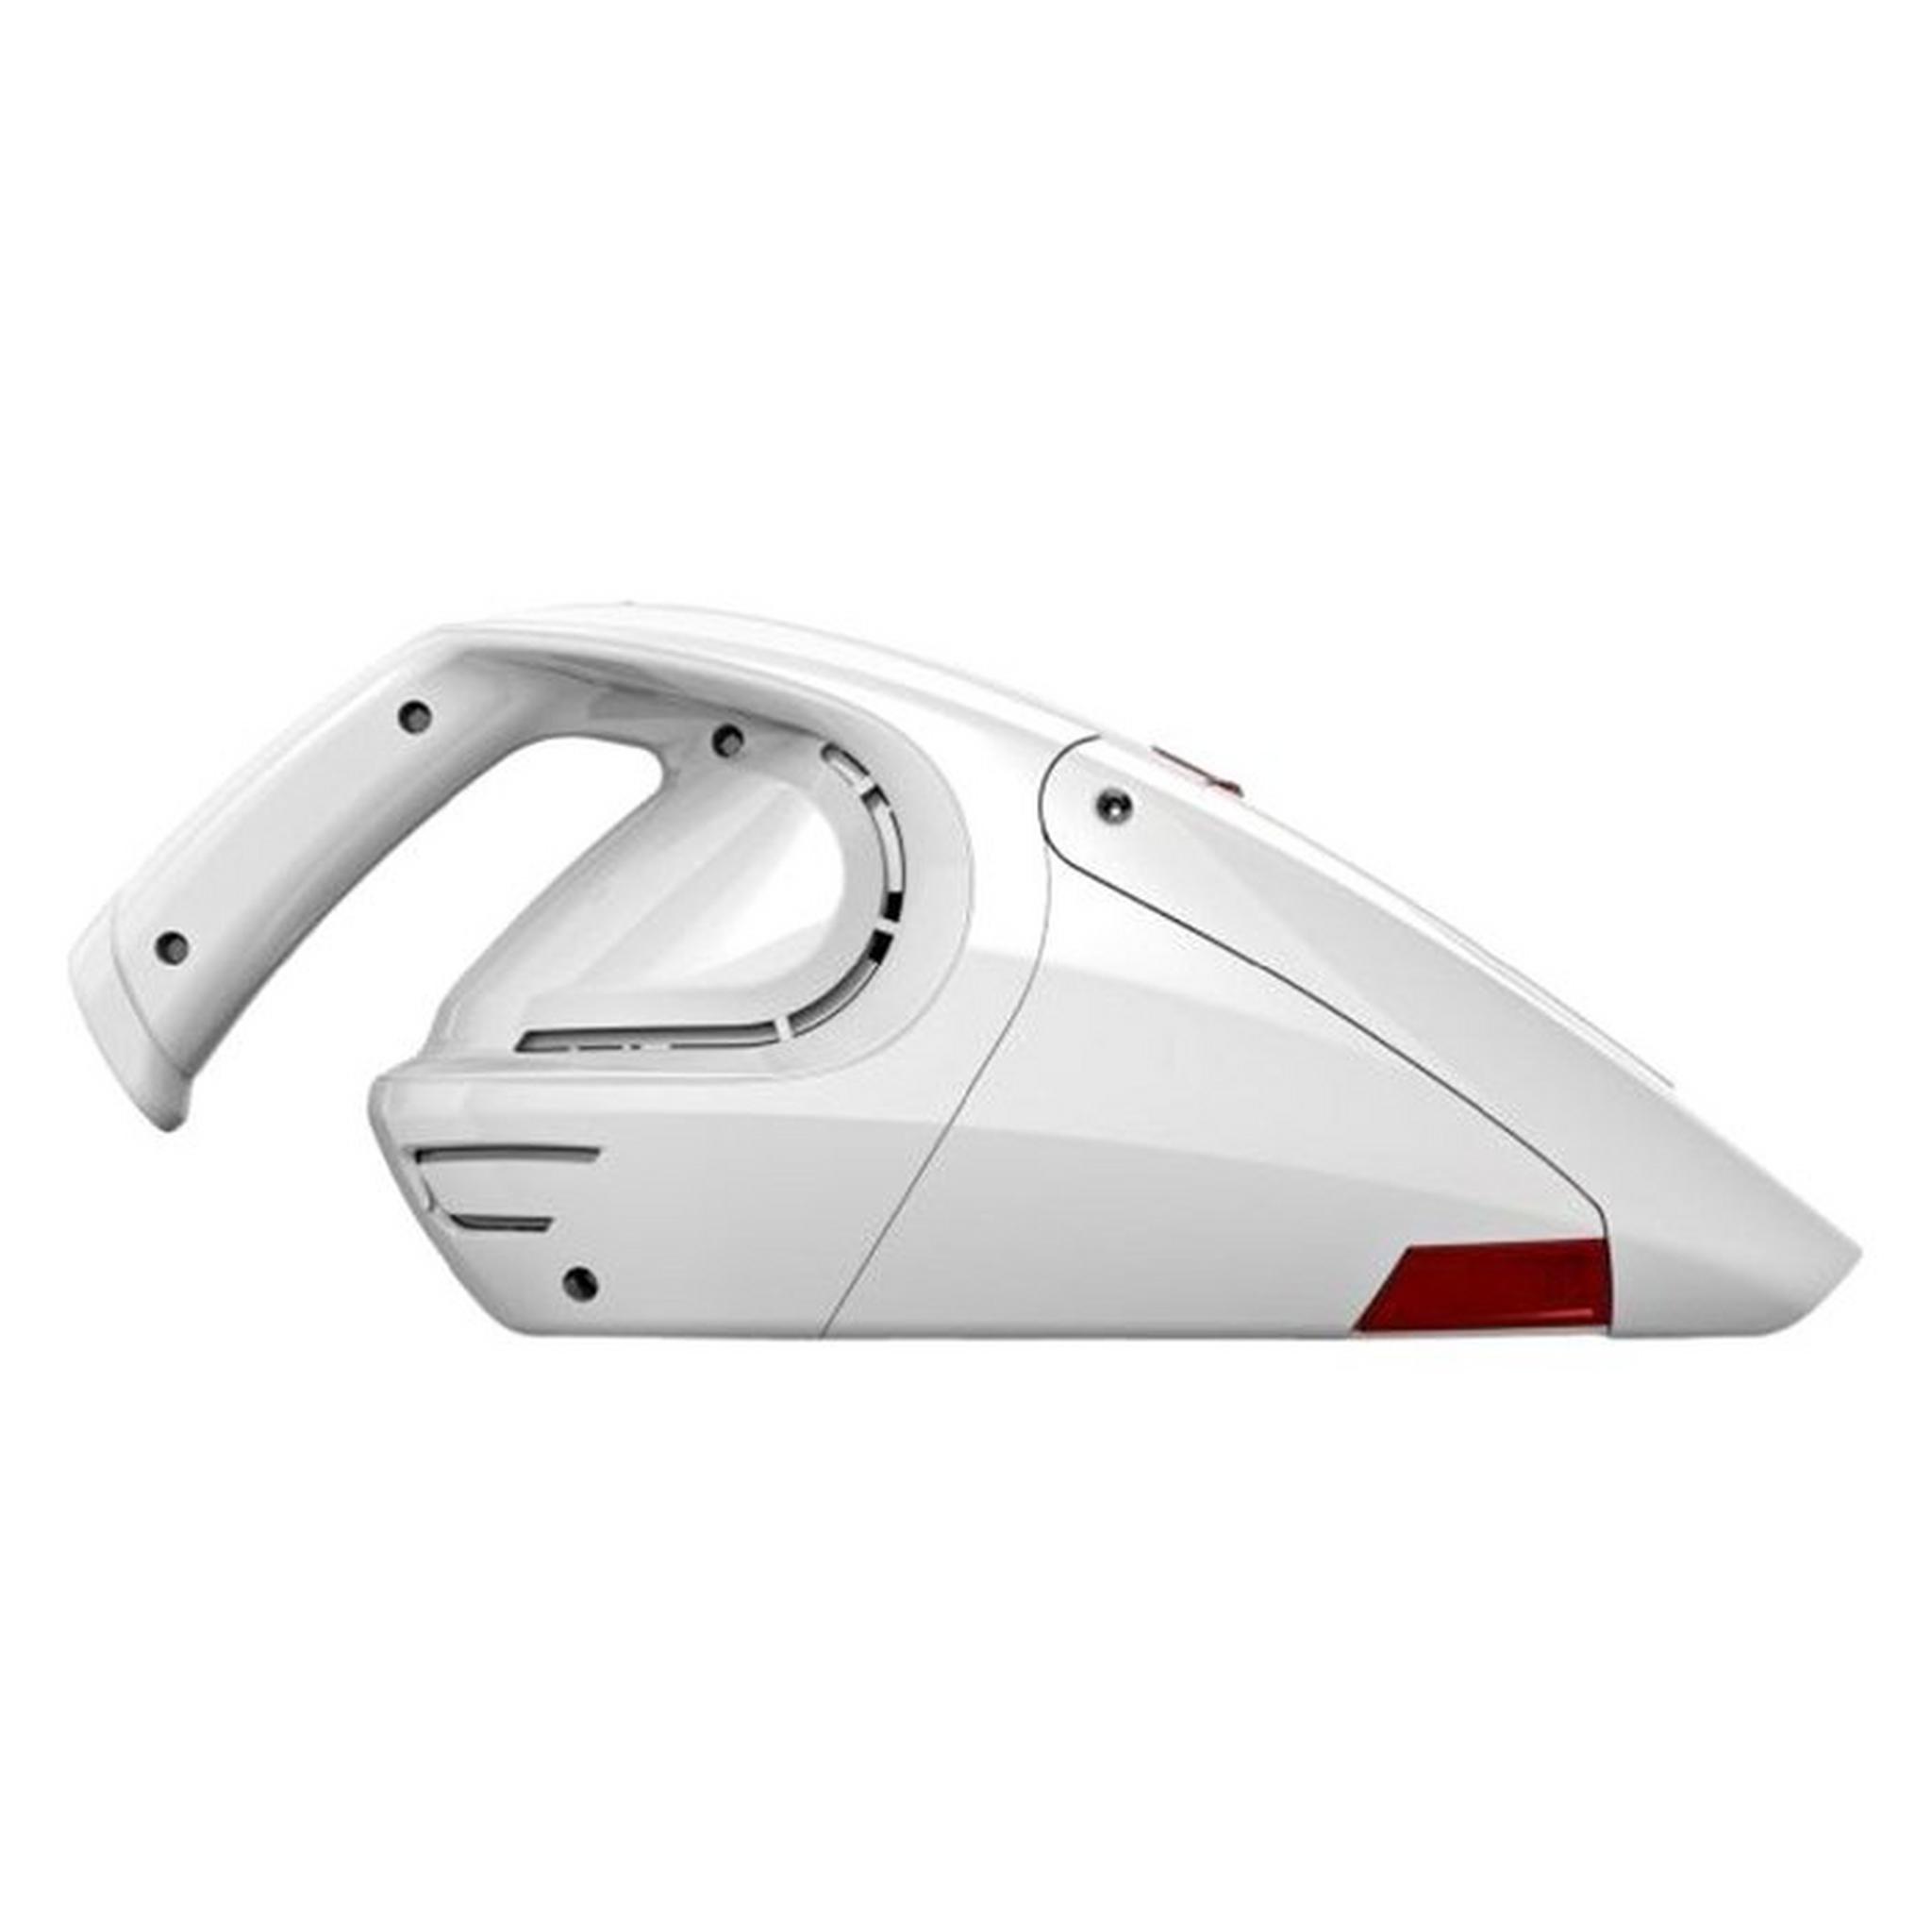 Hoover Gator Cordless HandHeld Vacuum Cleaner, 100W, 0.3 Liters, HQ86 - White